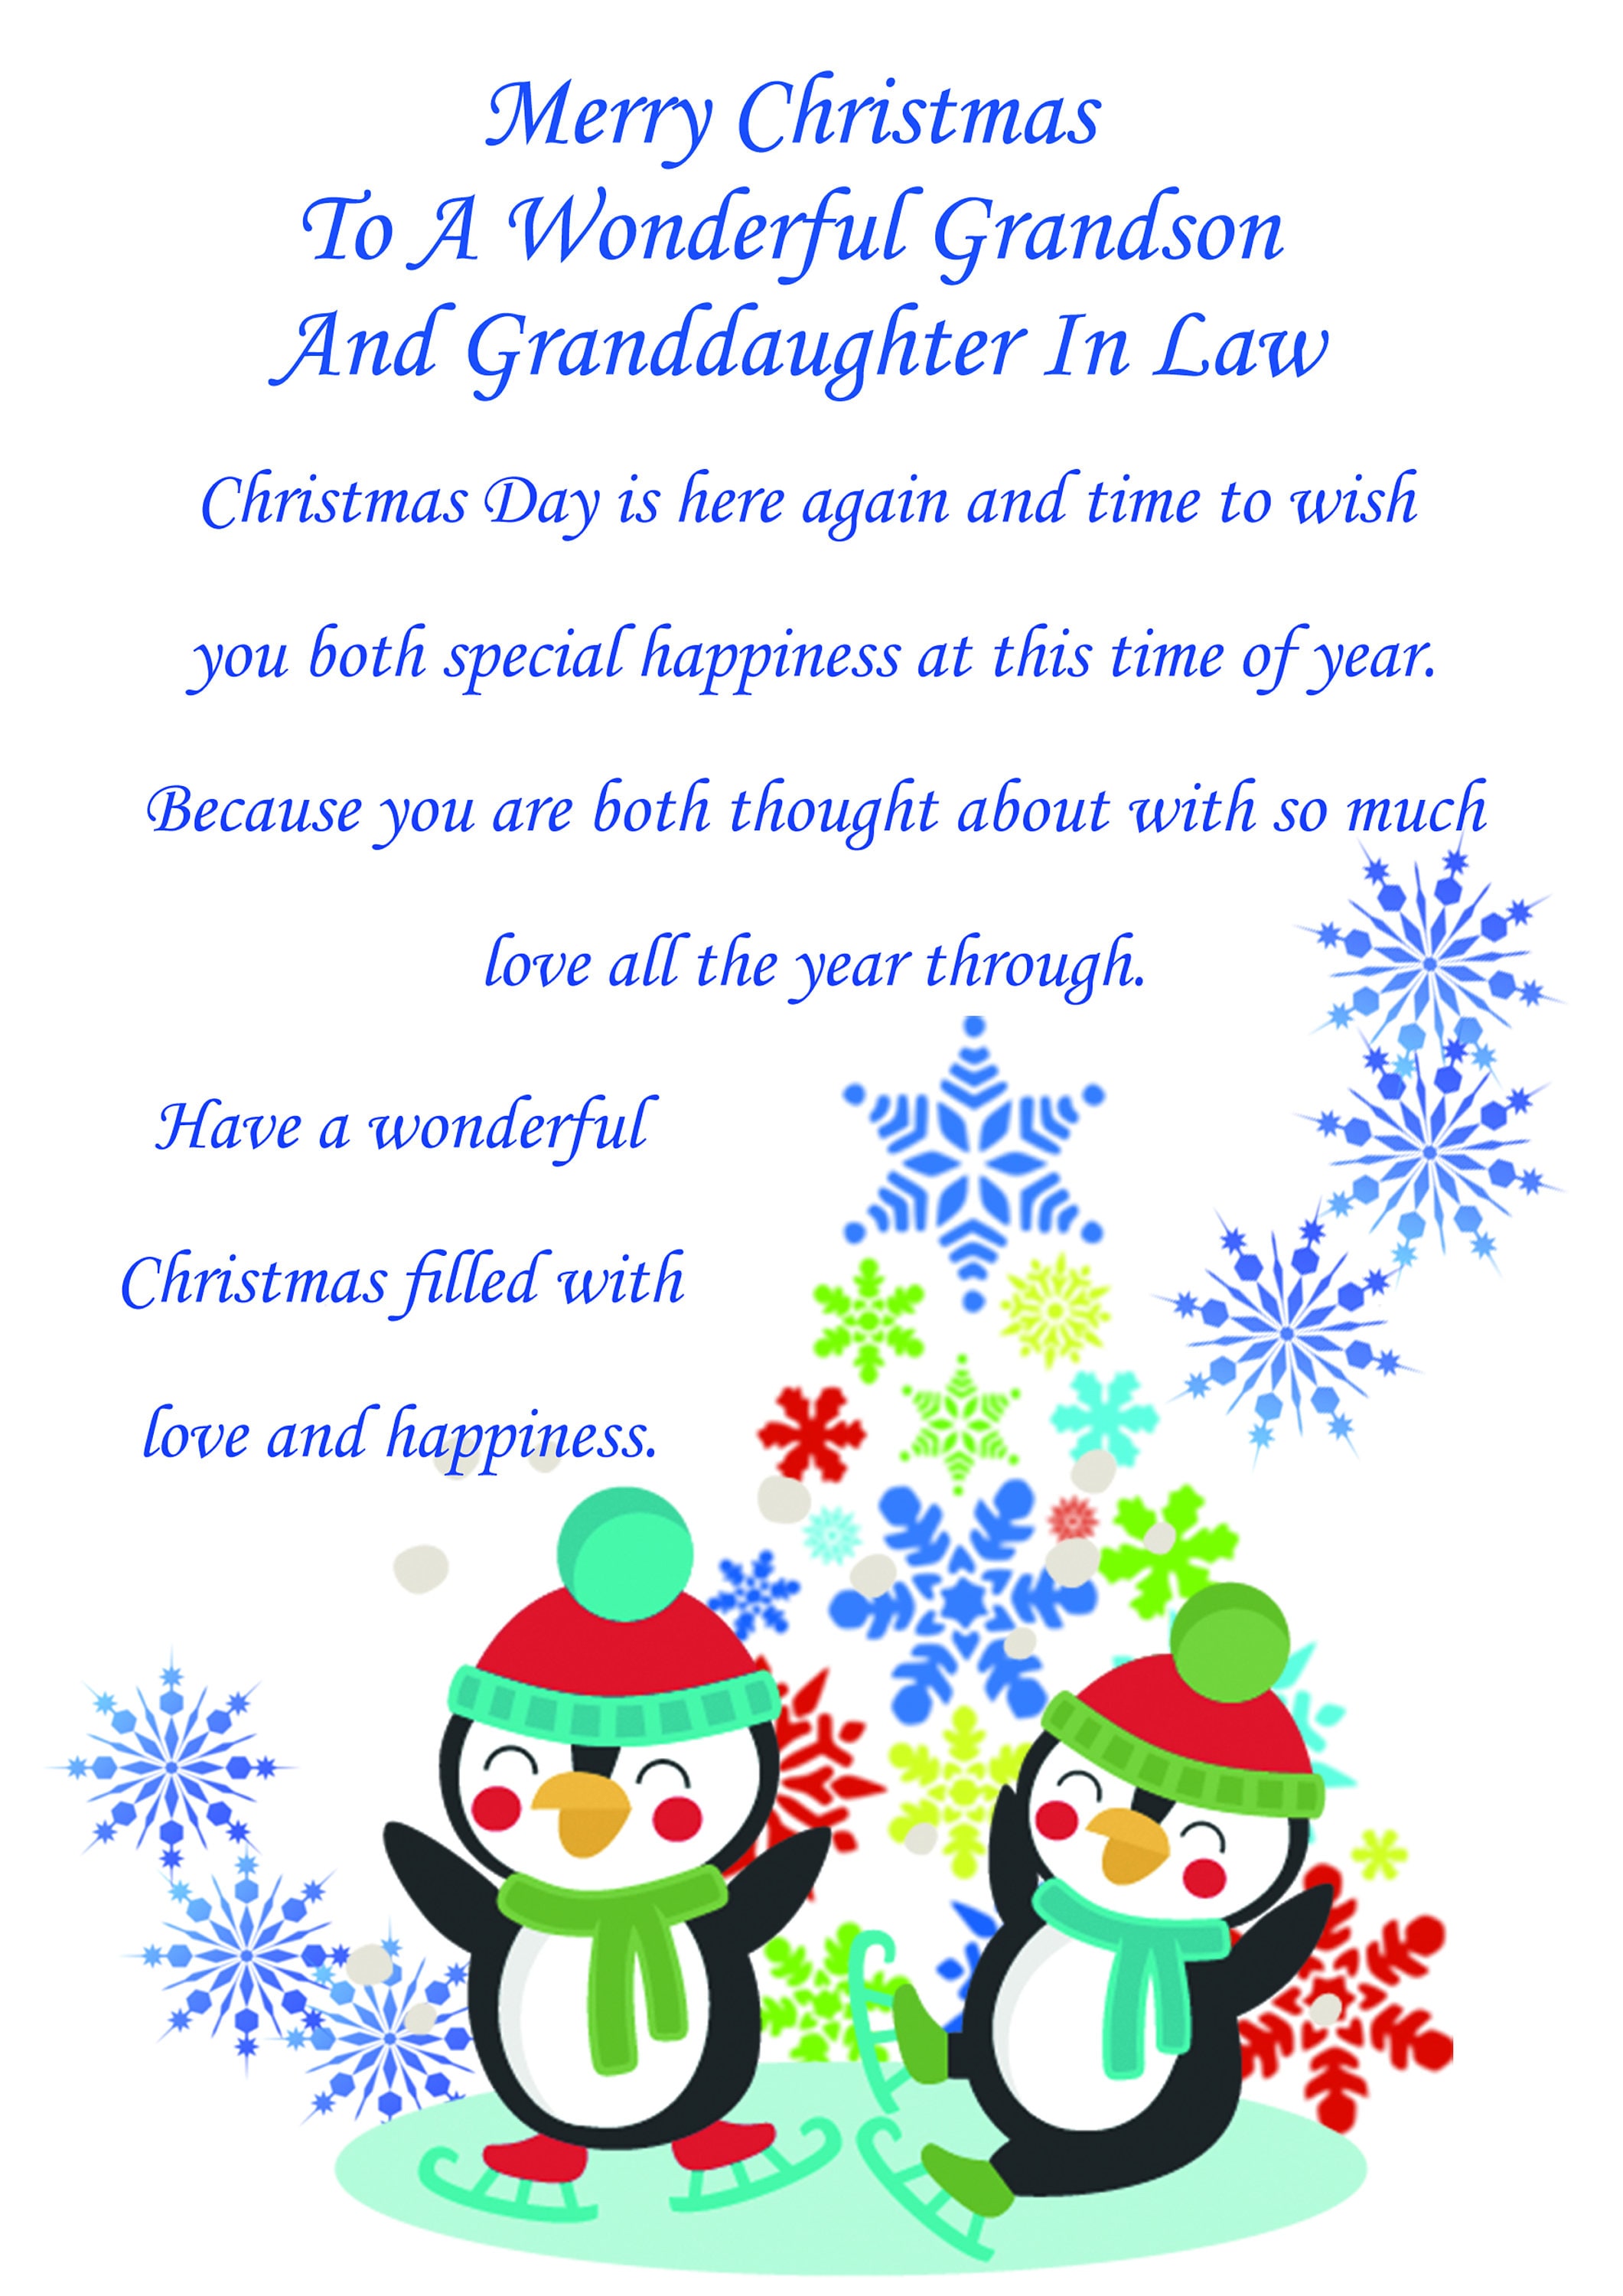 grandson-granddaughter-in-law-christmas-card-cute